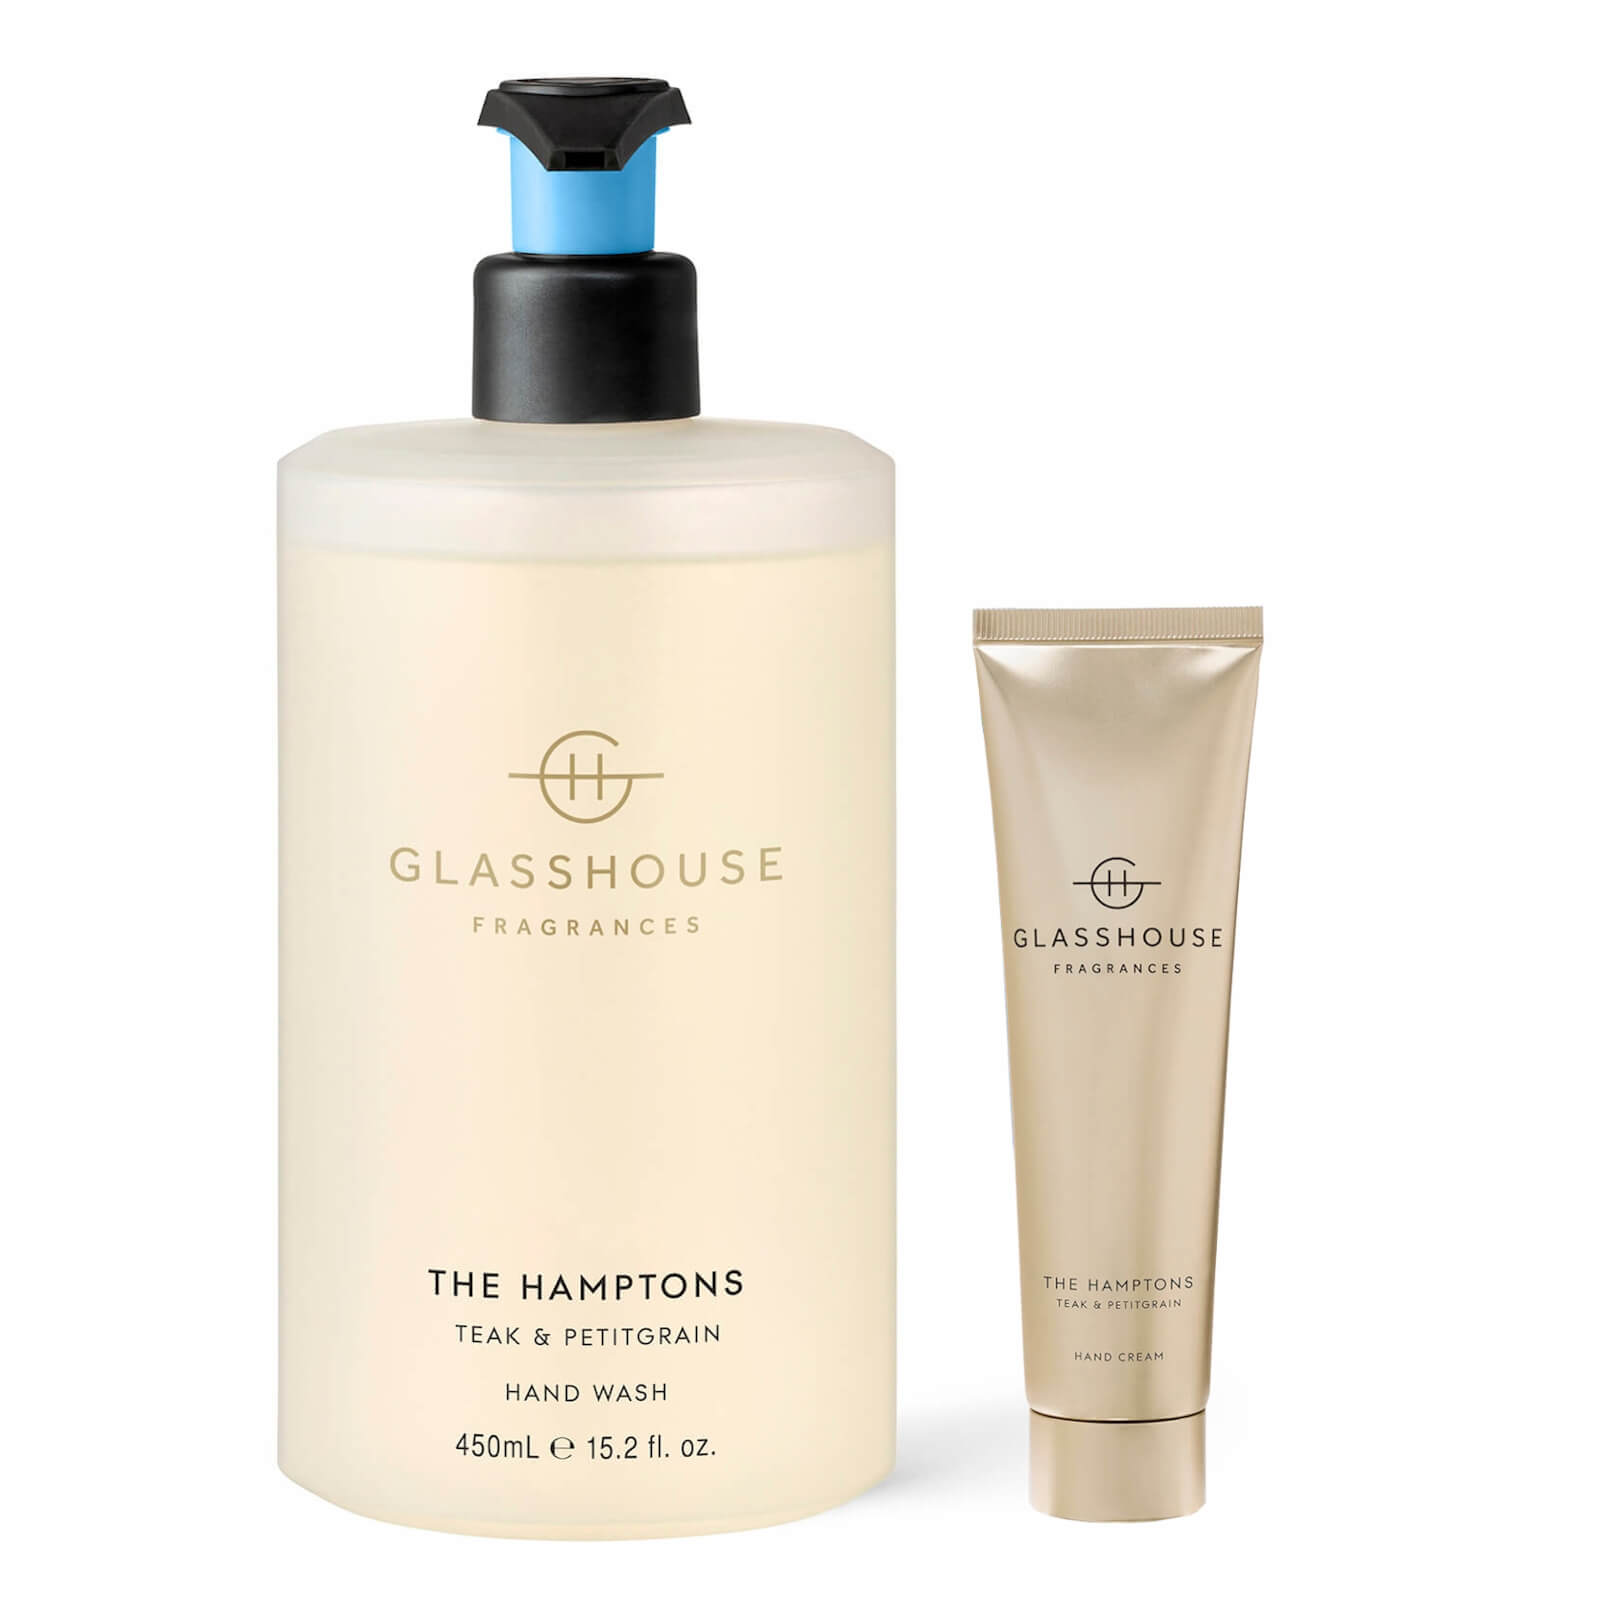 Glasshouse Fragrances Glasshouse Hand Wash and Cream - The Hamptons